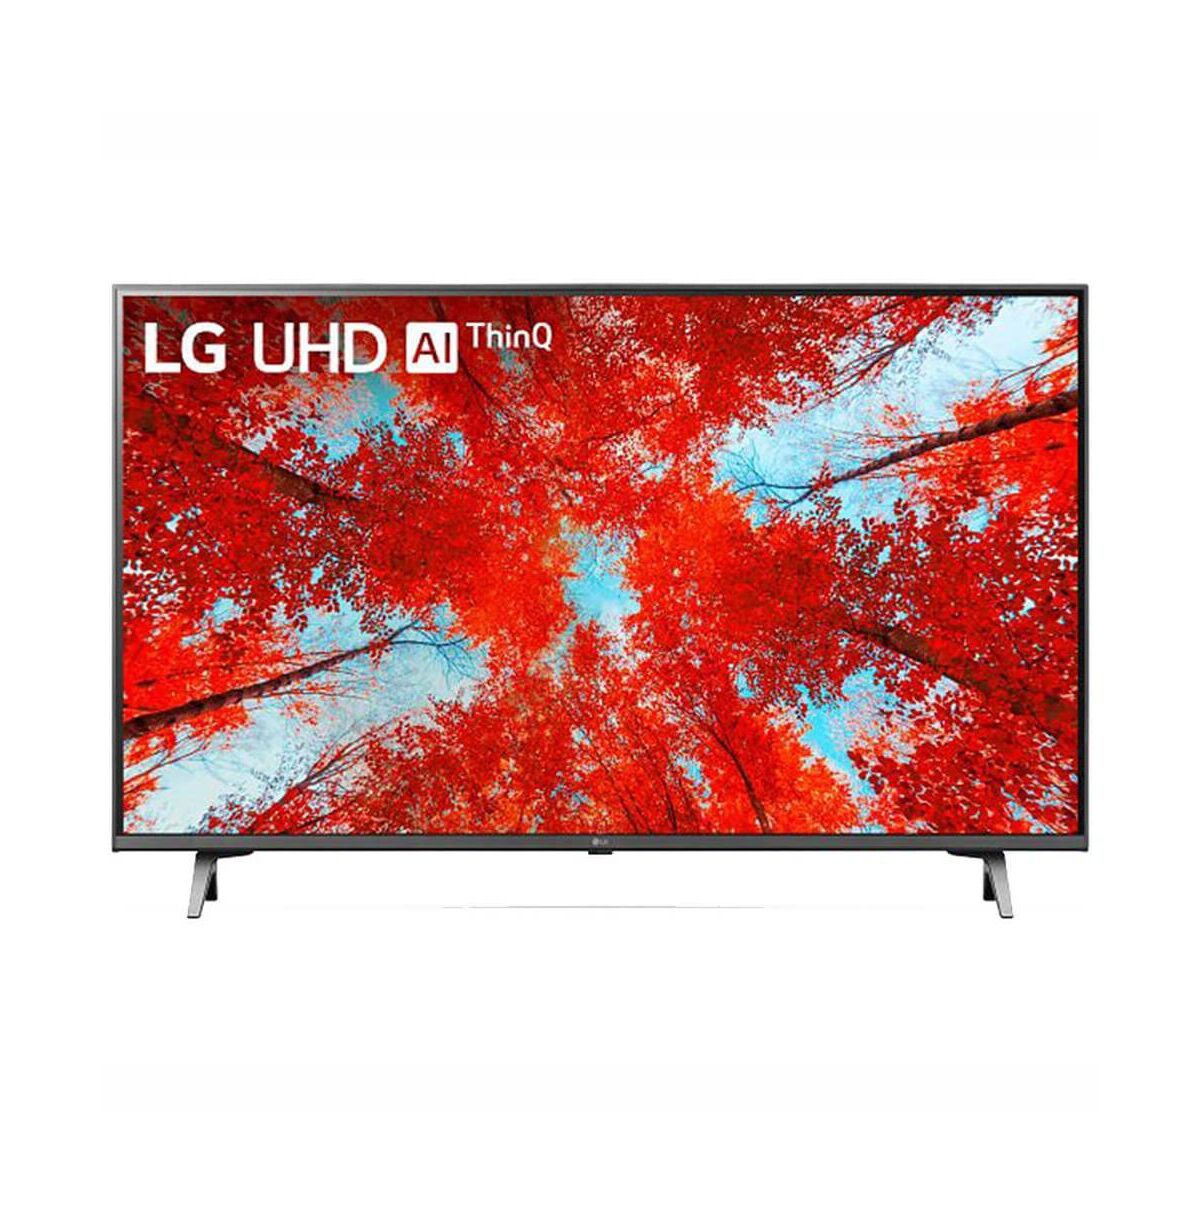 LG 55 inch Uhd 90 Series 4K Smart Tv with Ai ThinQ - Black